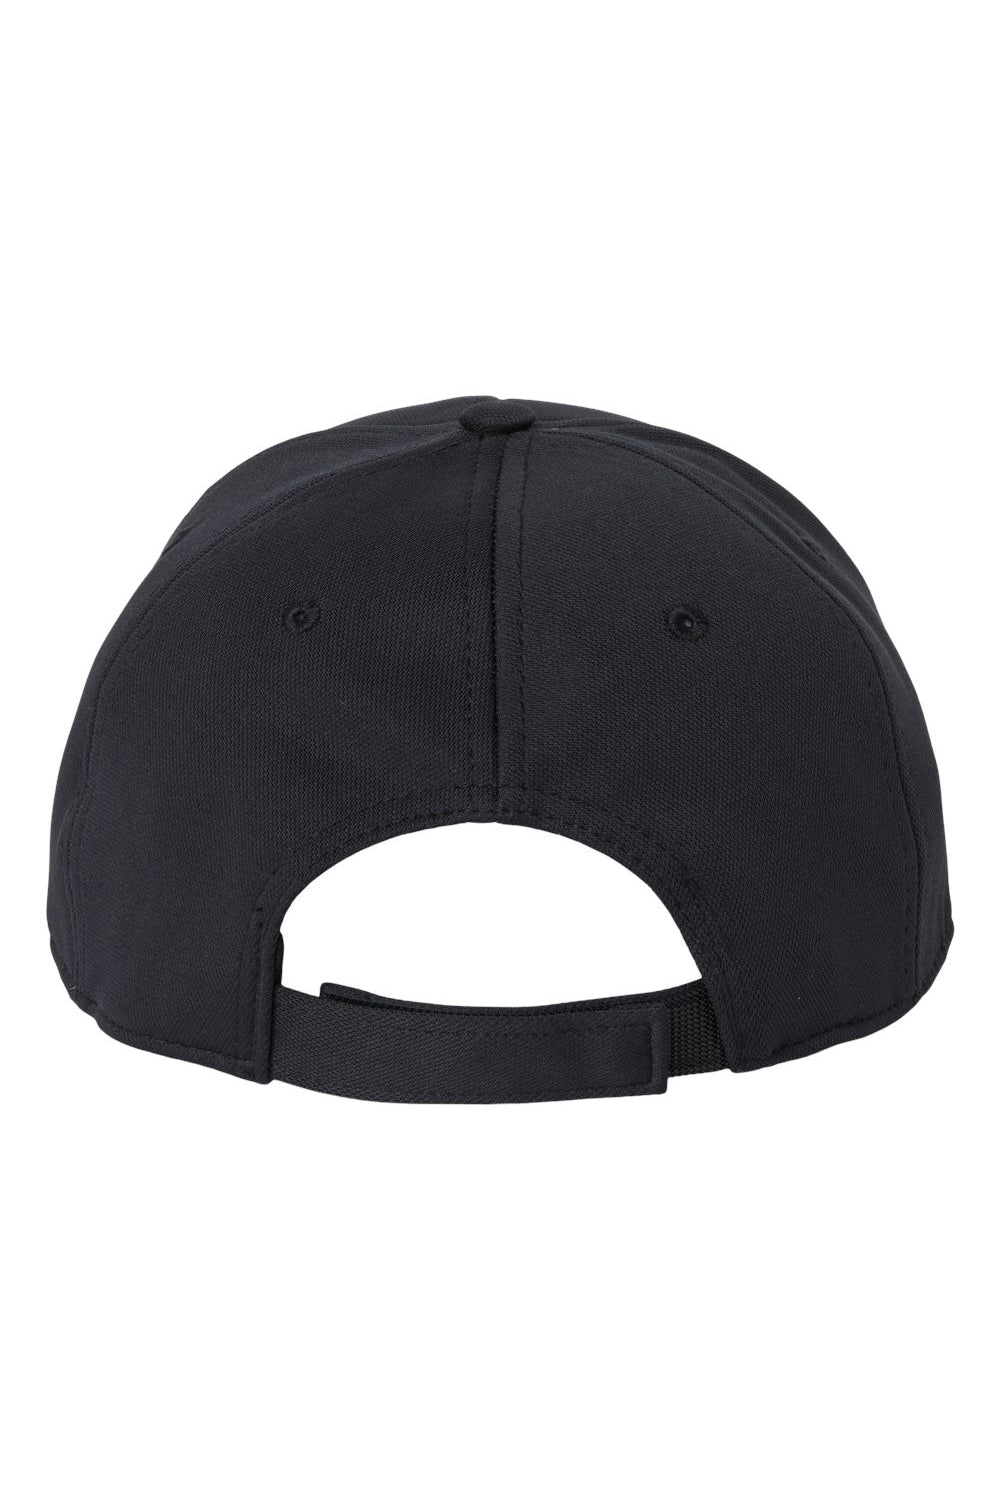 Atlantis Headwear SKYE Mens Sustainable Honeycomb Adjustable Hat Black Flat Back